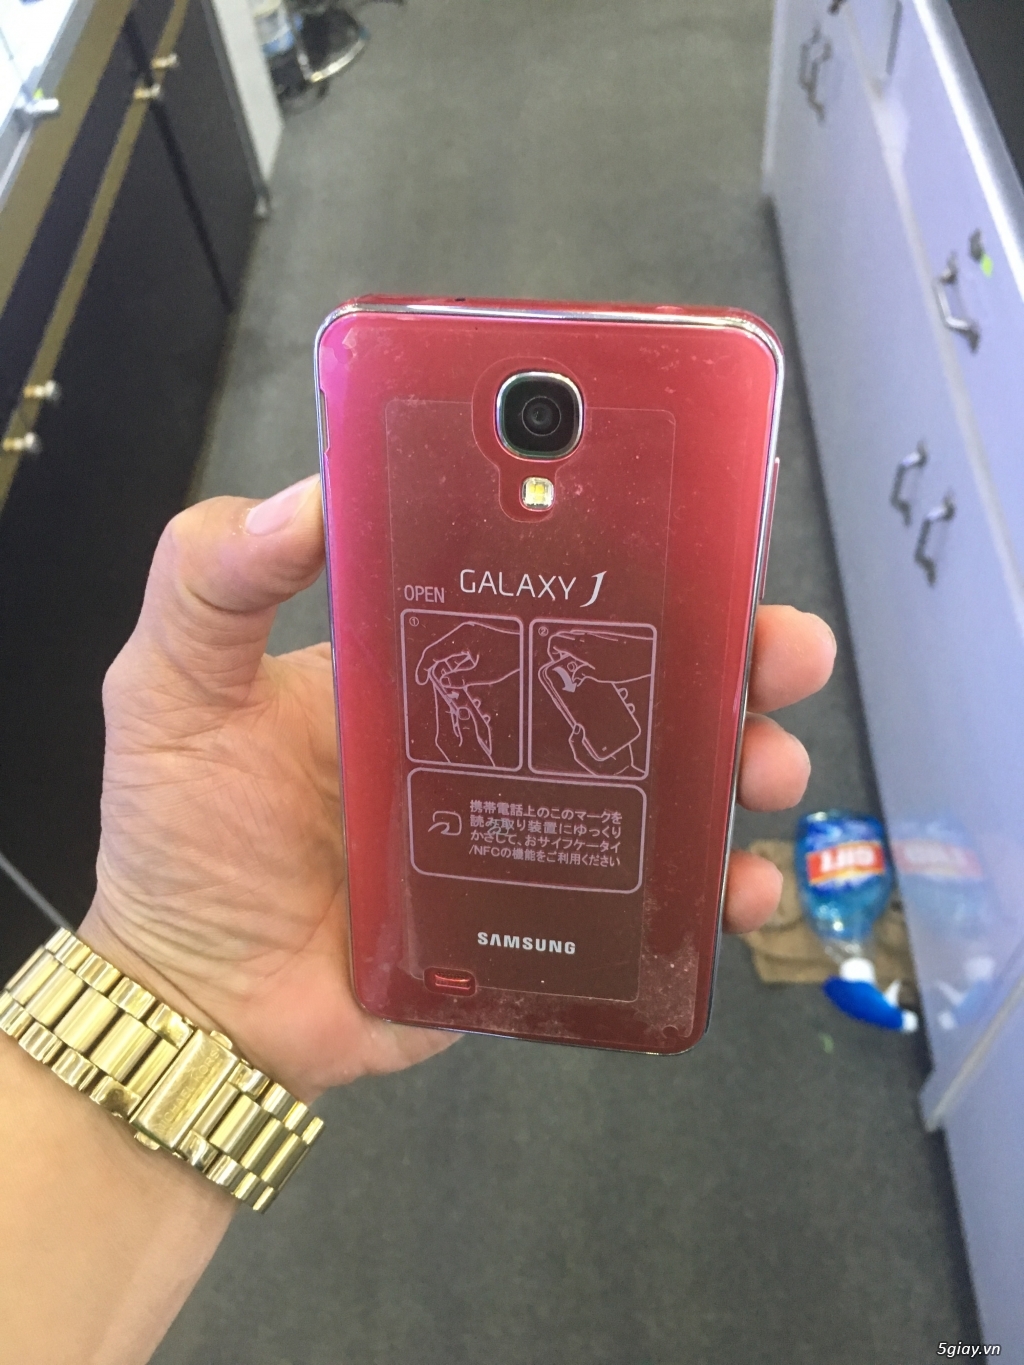 Samsung galaxy J, samsung note 3, oppo n1 mini, nexus 4, BB q10 - 2